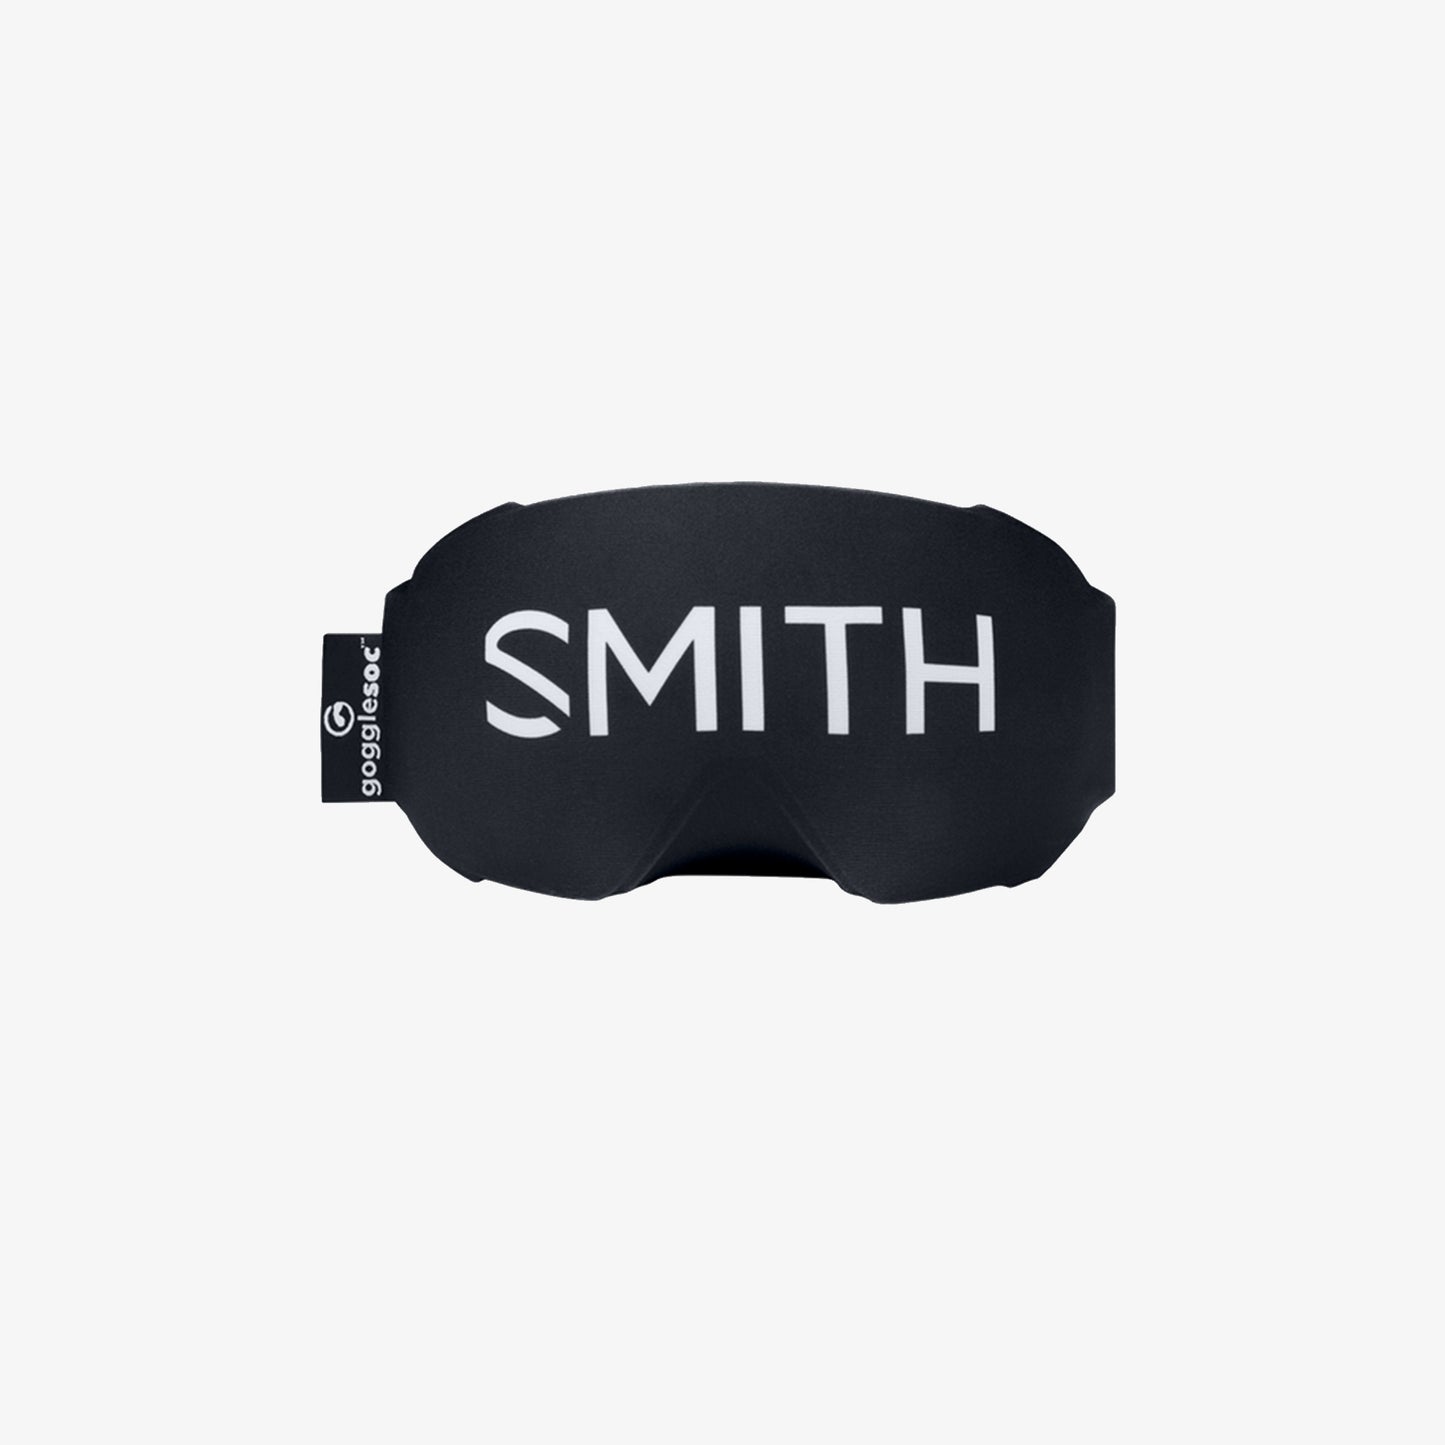 Smith 4D MAG Slate 22 CHROMAPOP SUN BLACK Snowboardgoggle 22/23